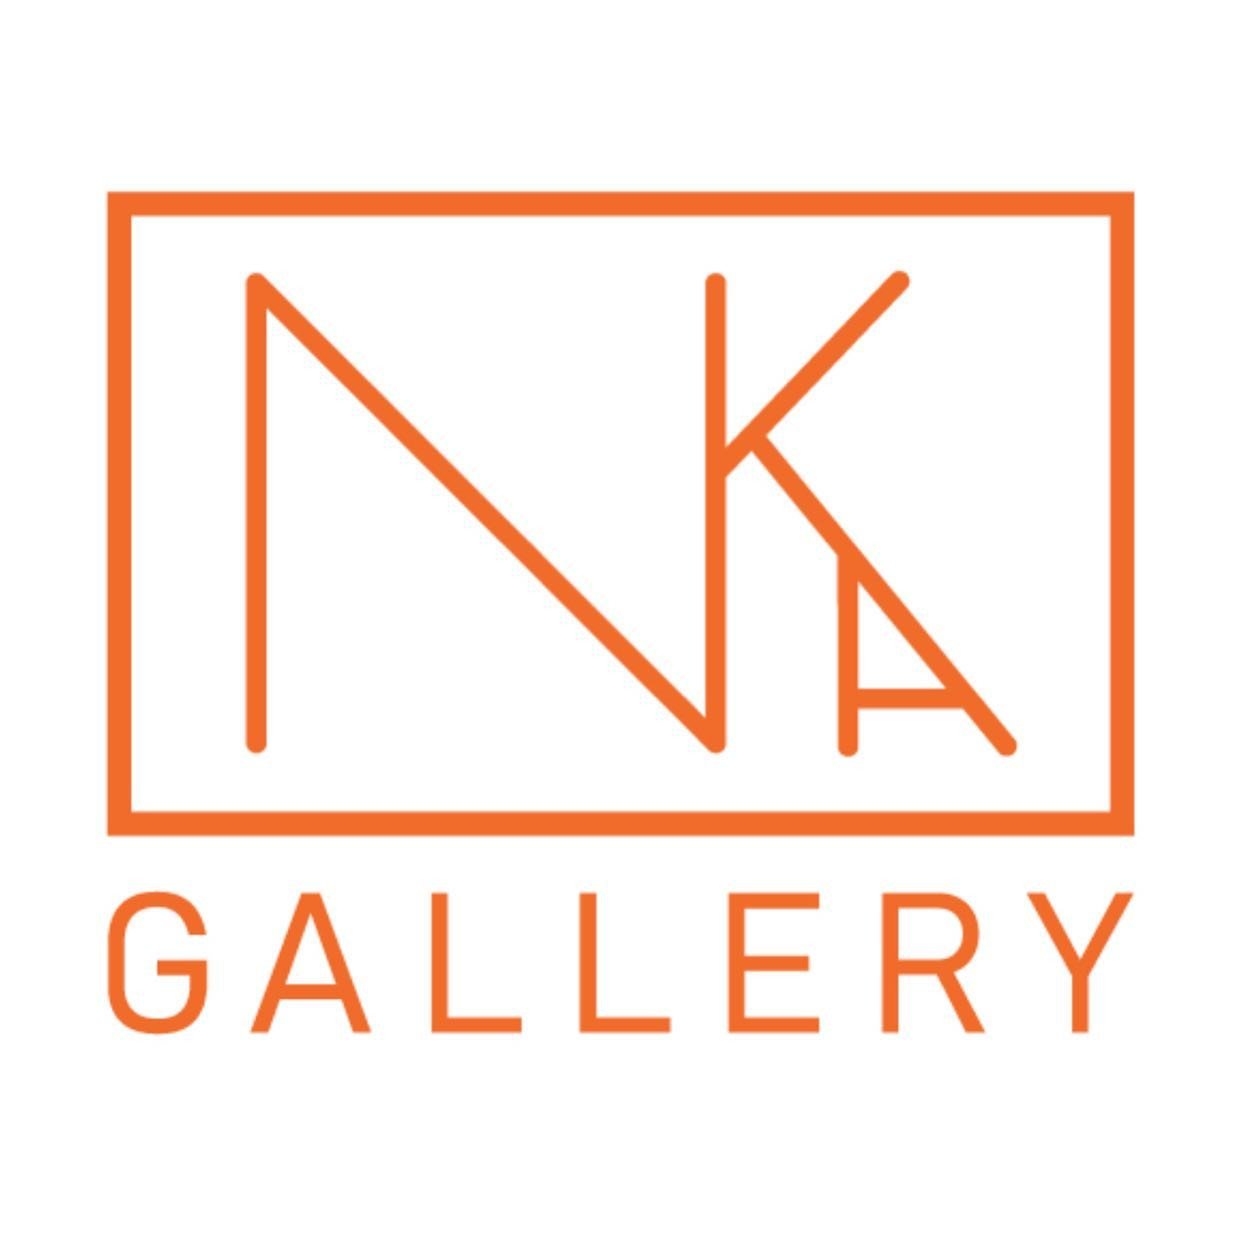 Nka Gallery Nashville, TN - Evolution of the Trap